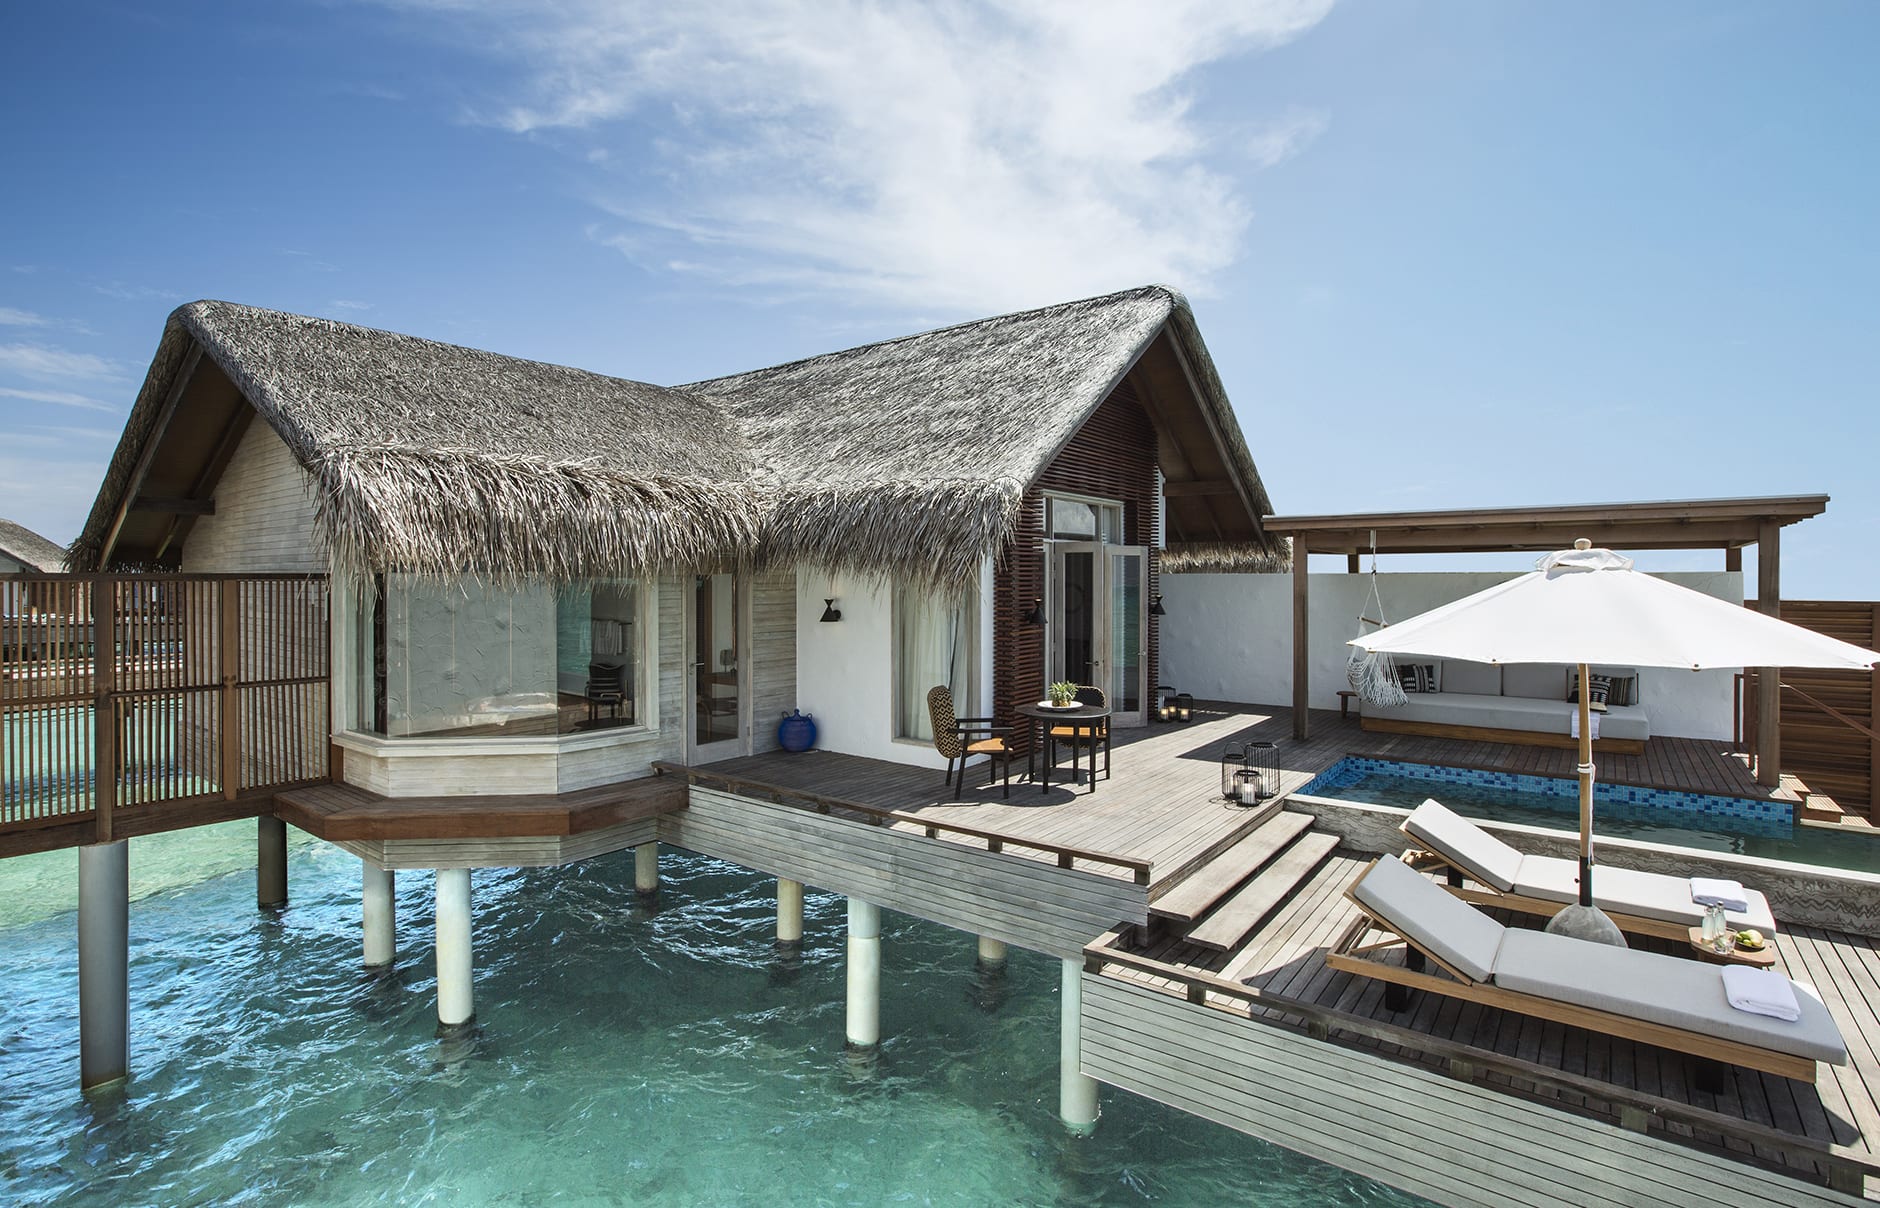 Fairmont Maldives, Sirru Fen Fushi, 
Shaviyani Atoll, Maldives. Hotel Review by TravelPlusStyle. Photo © AccorHotels